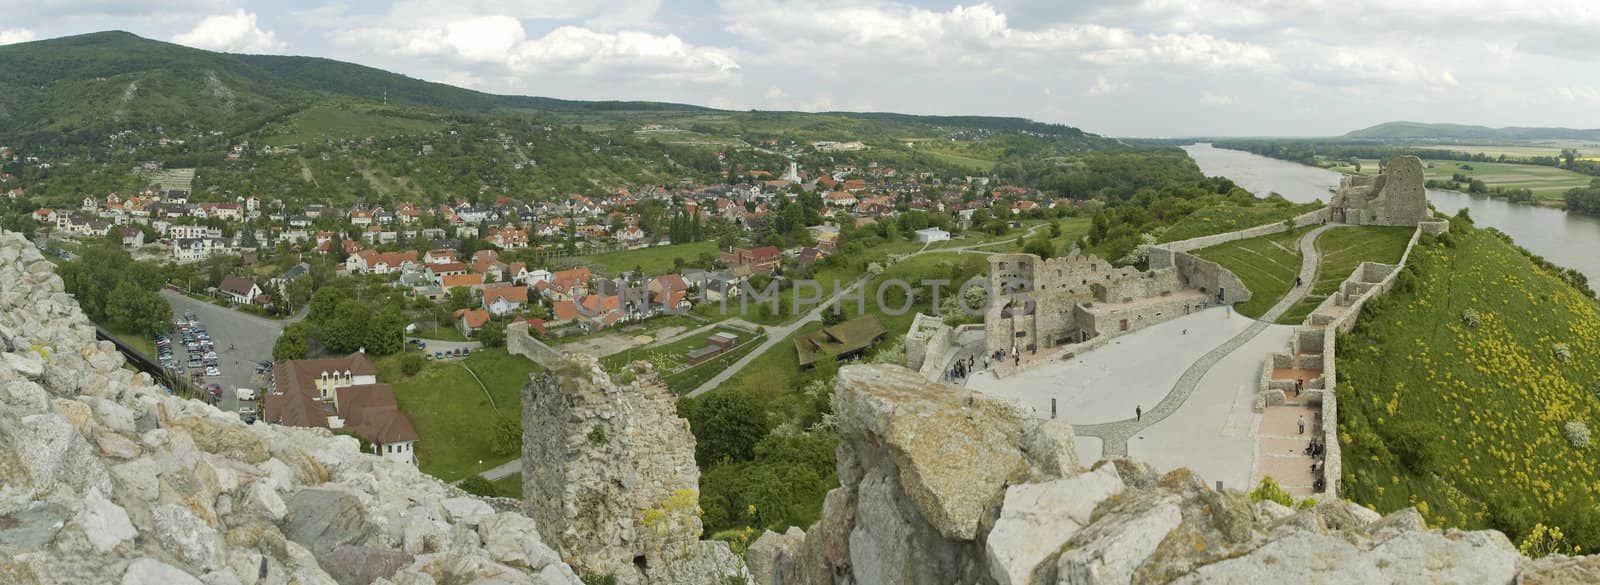 Slavin castle ruins panorama, Slovakia, near Bratislava